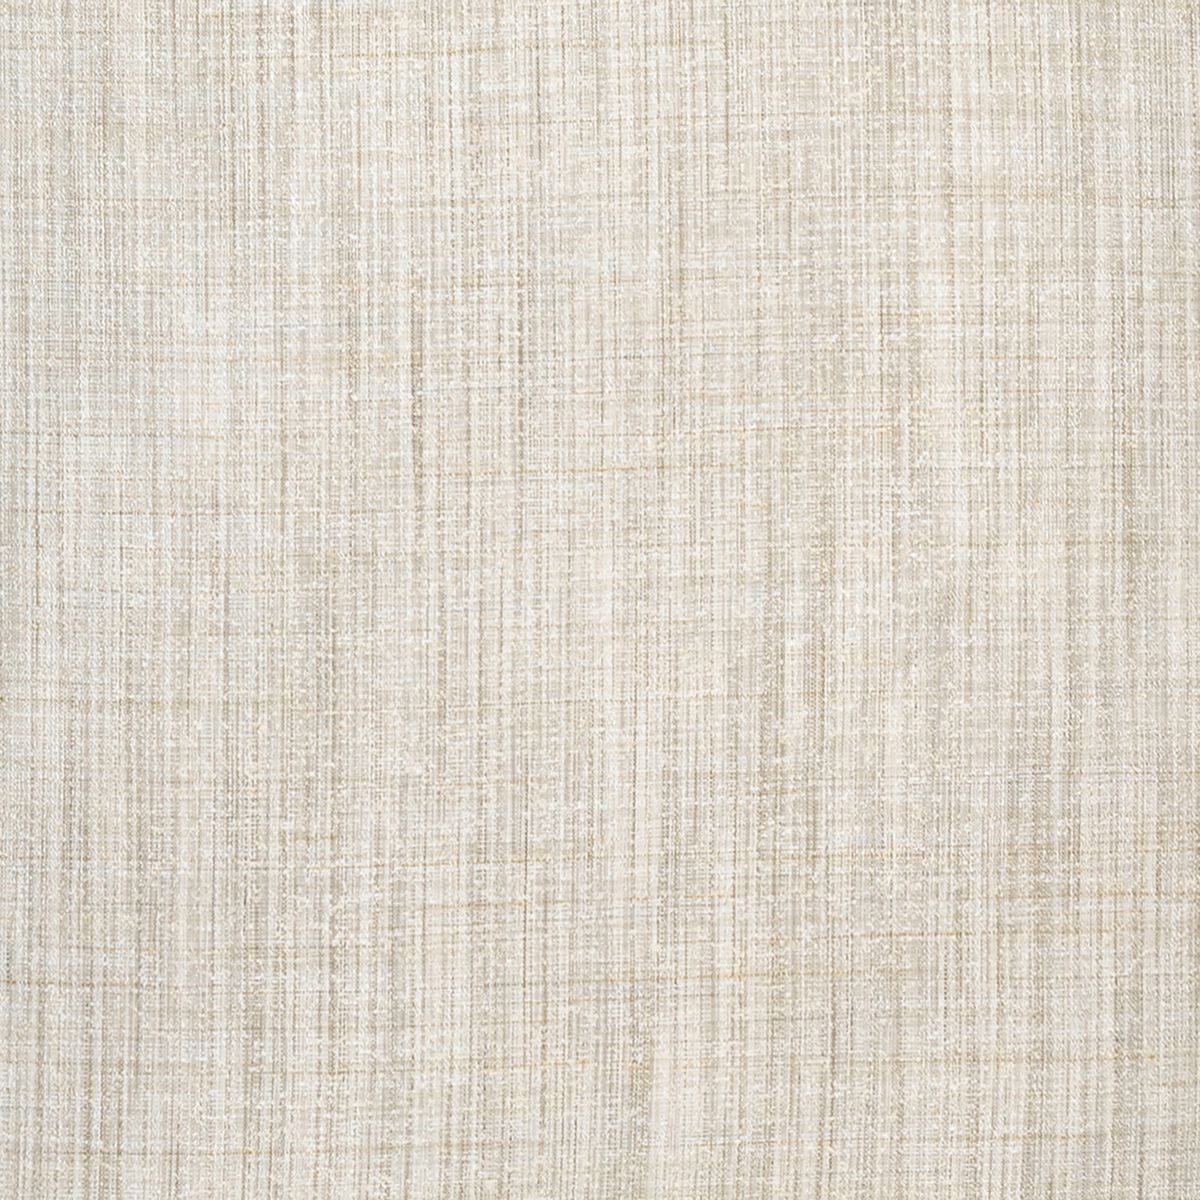 Ravenna Linen Fabric by Voyage Maison